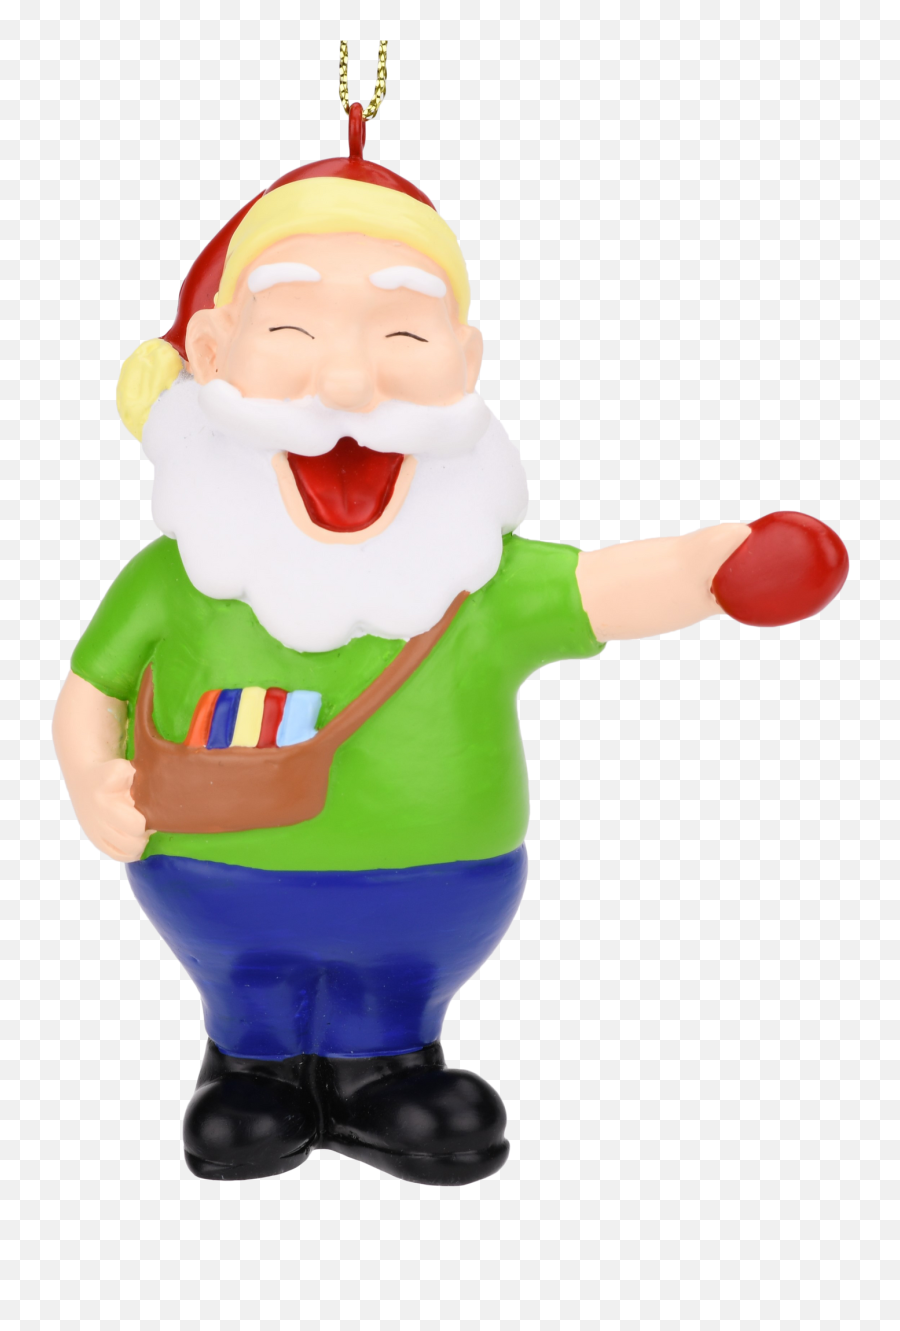 Santa Frisbee Disc Golf Christmas Ornament 2 Piece Set Emoji,Sant Claus Animated Emoticon